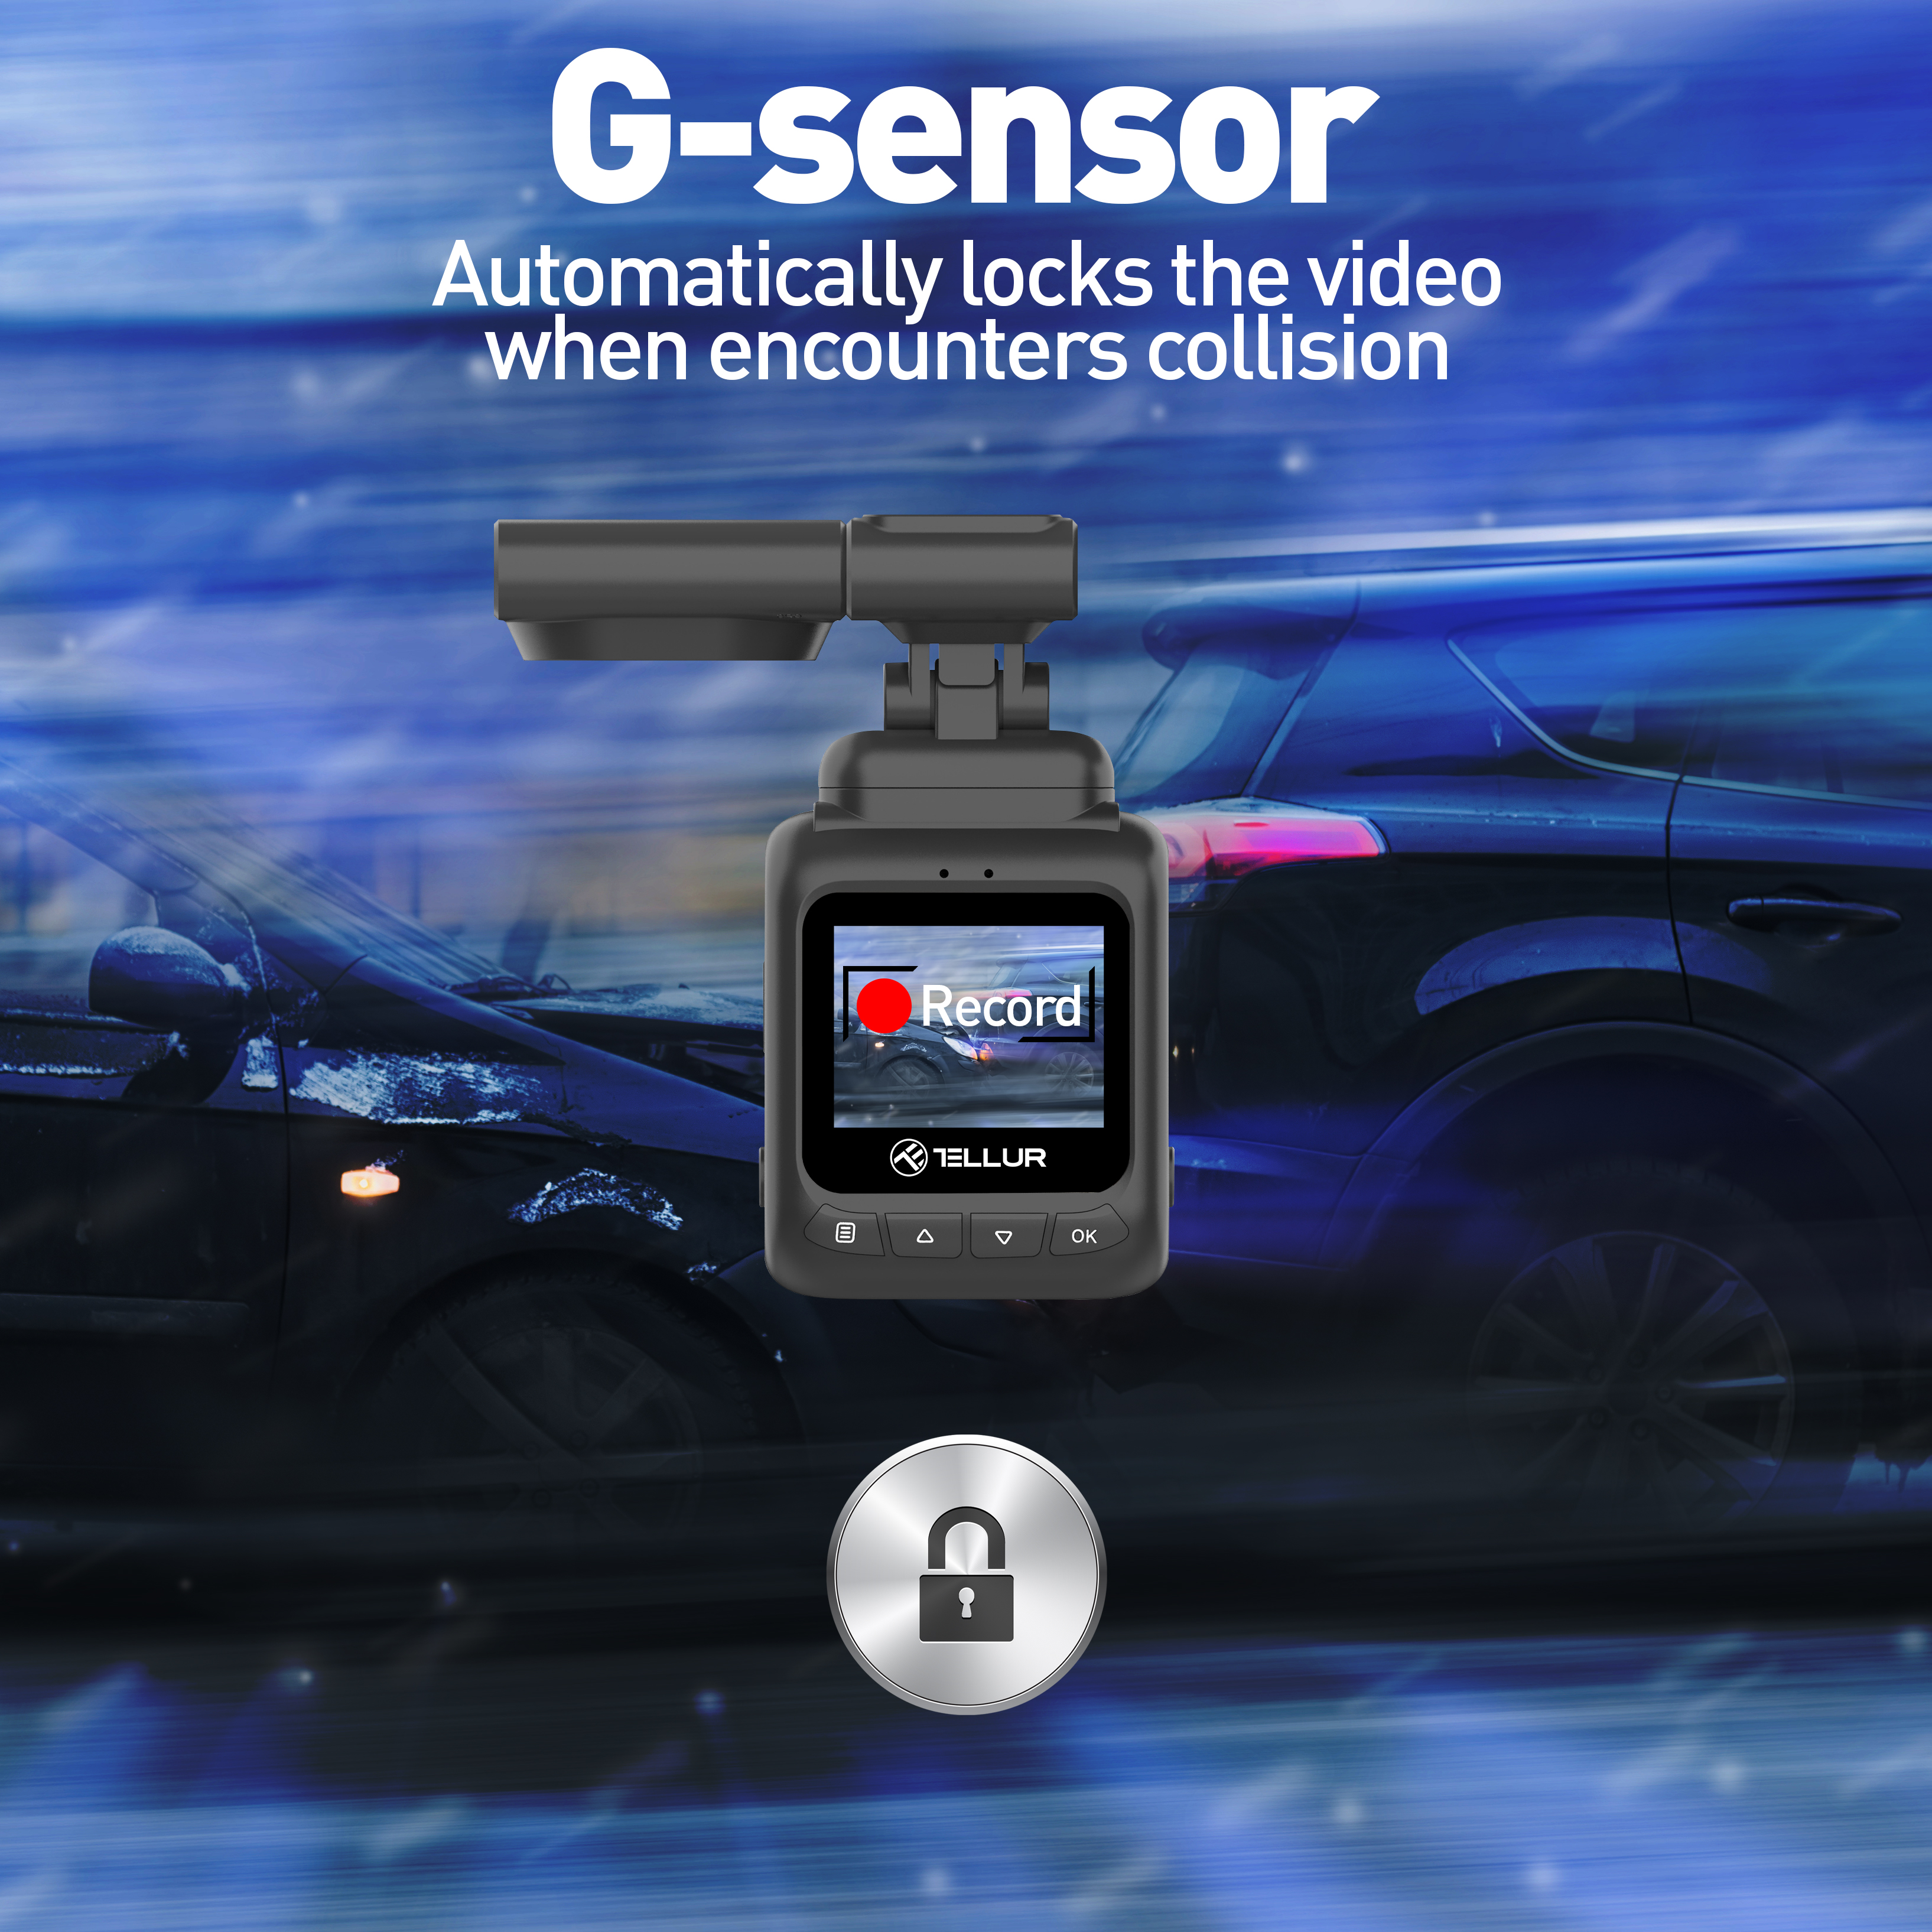 TELLUR Dash-Patrouille GPS Dashcam DC2, 1080P, FullHD, Display